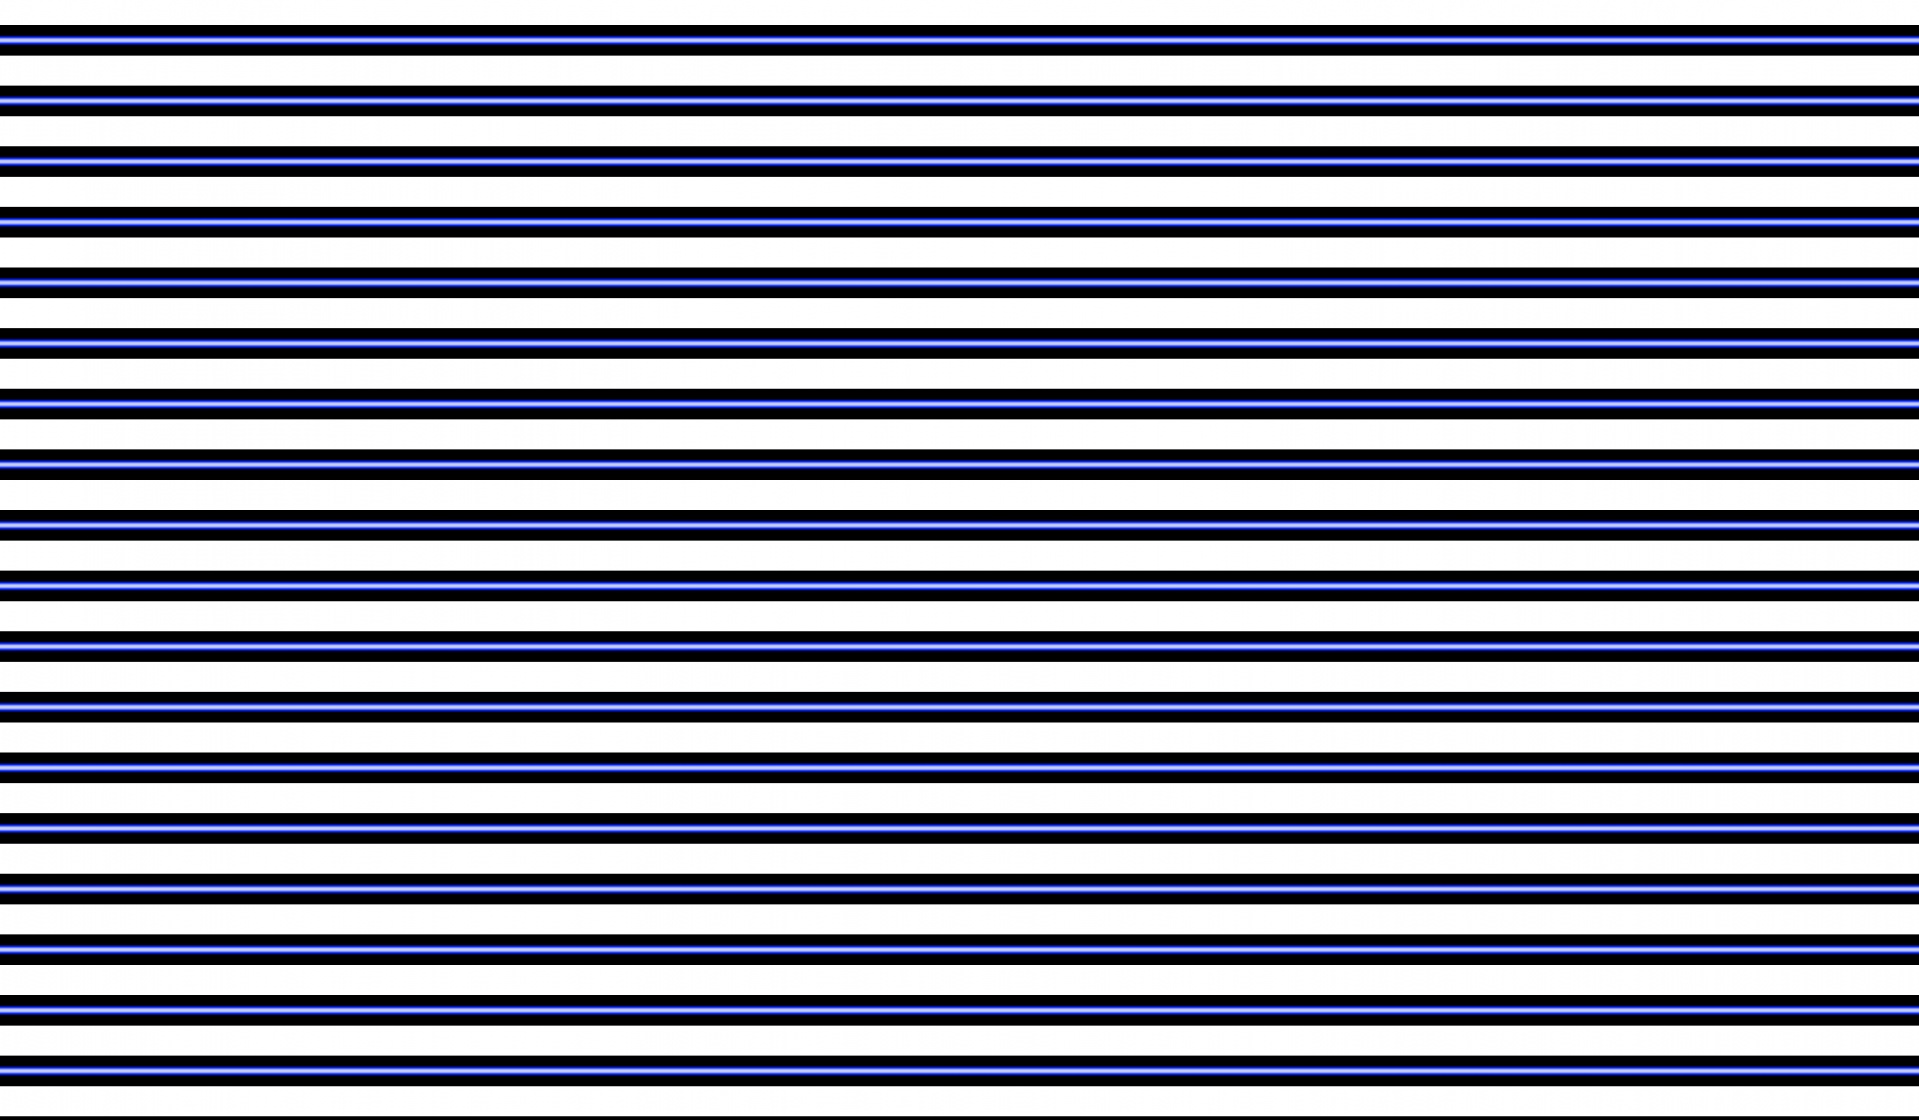 Lines,horizontal,black,thin,white - free photo from needpix.